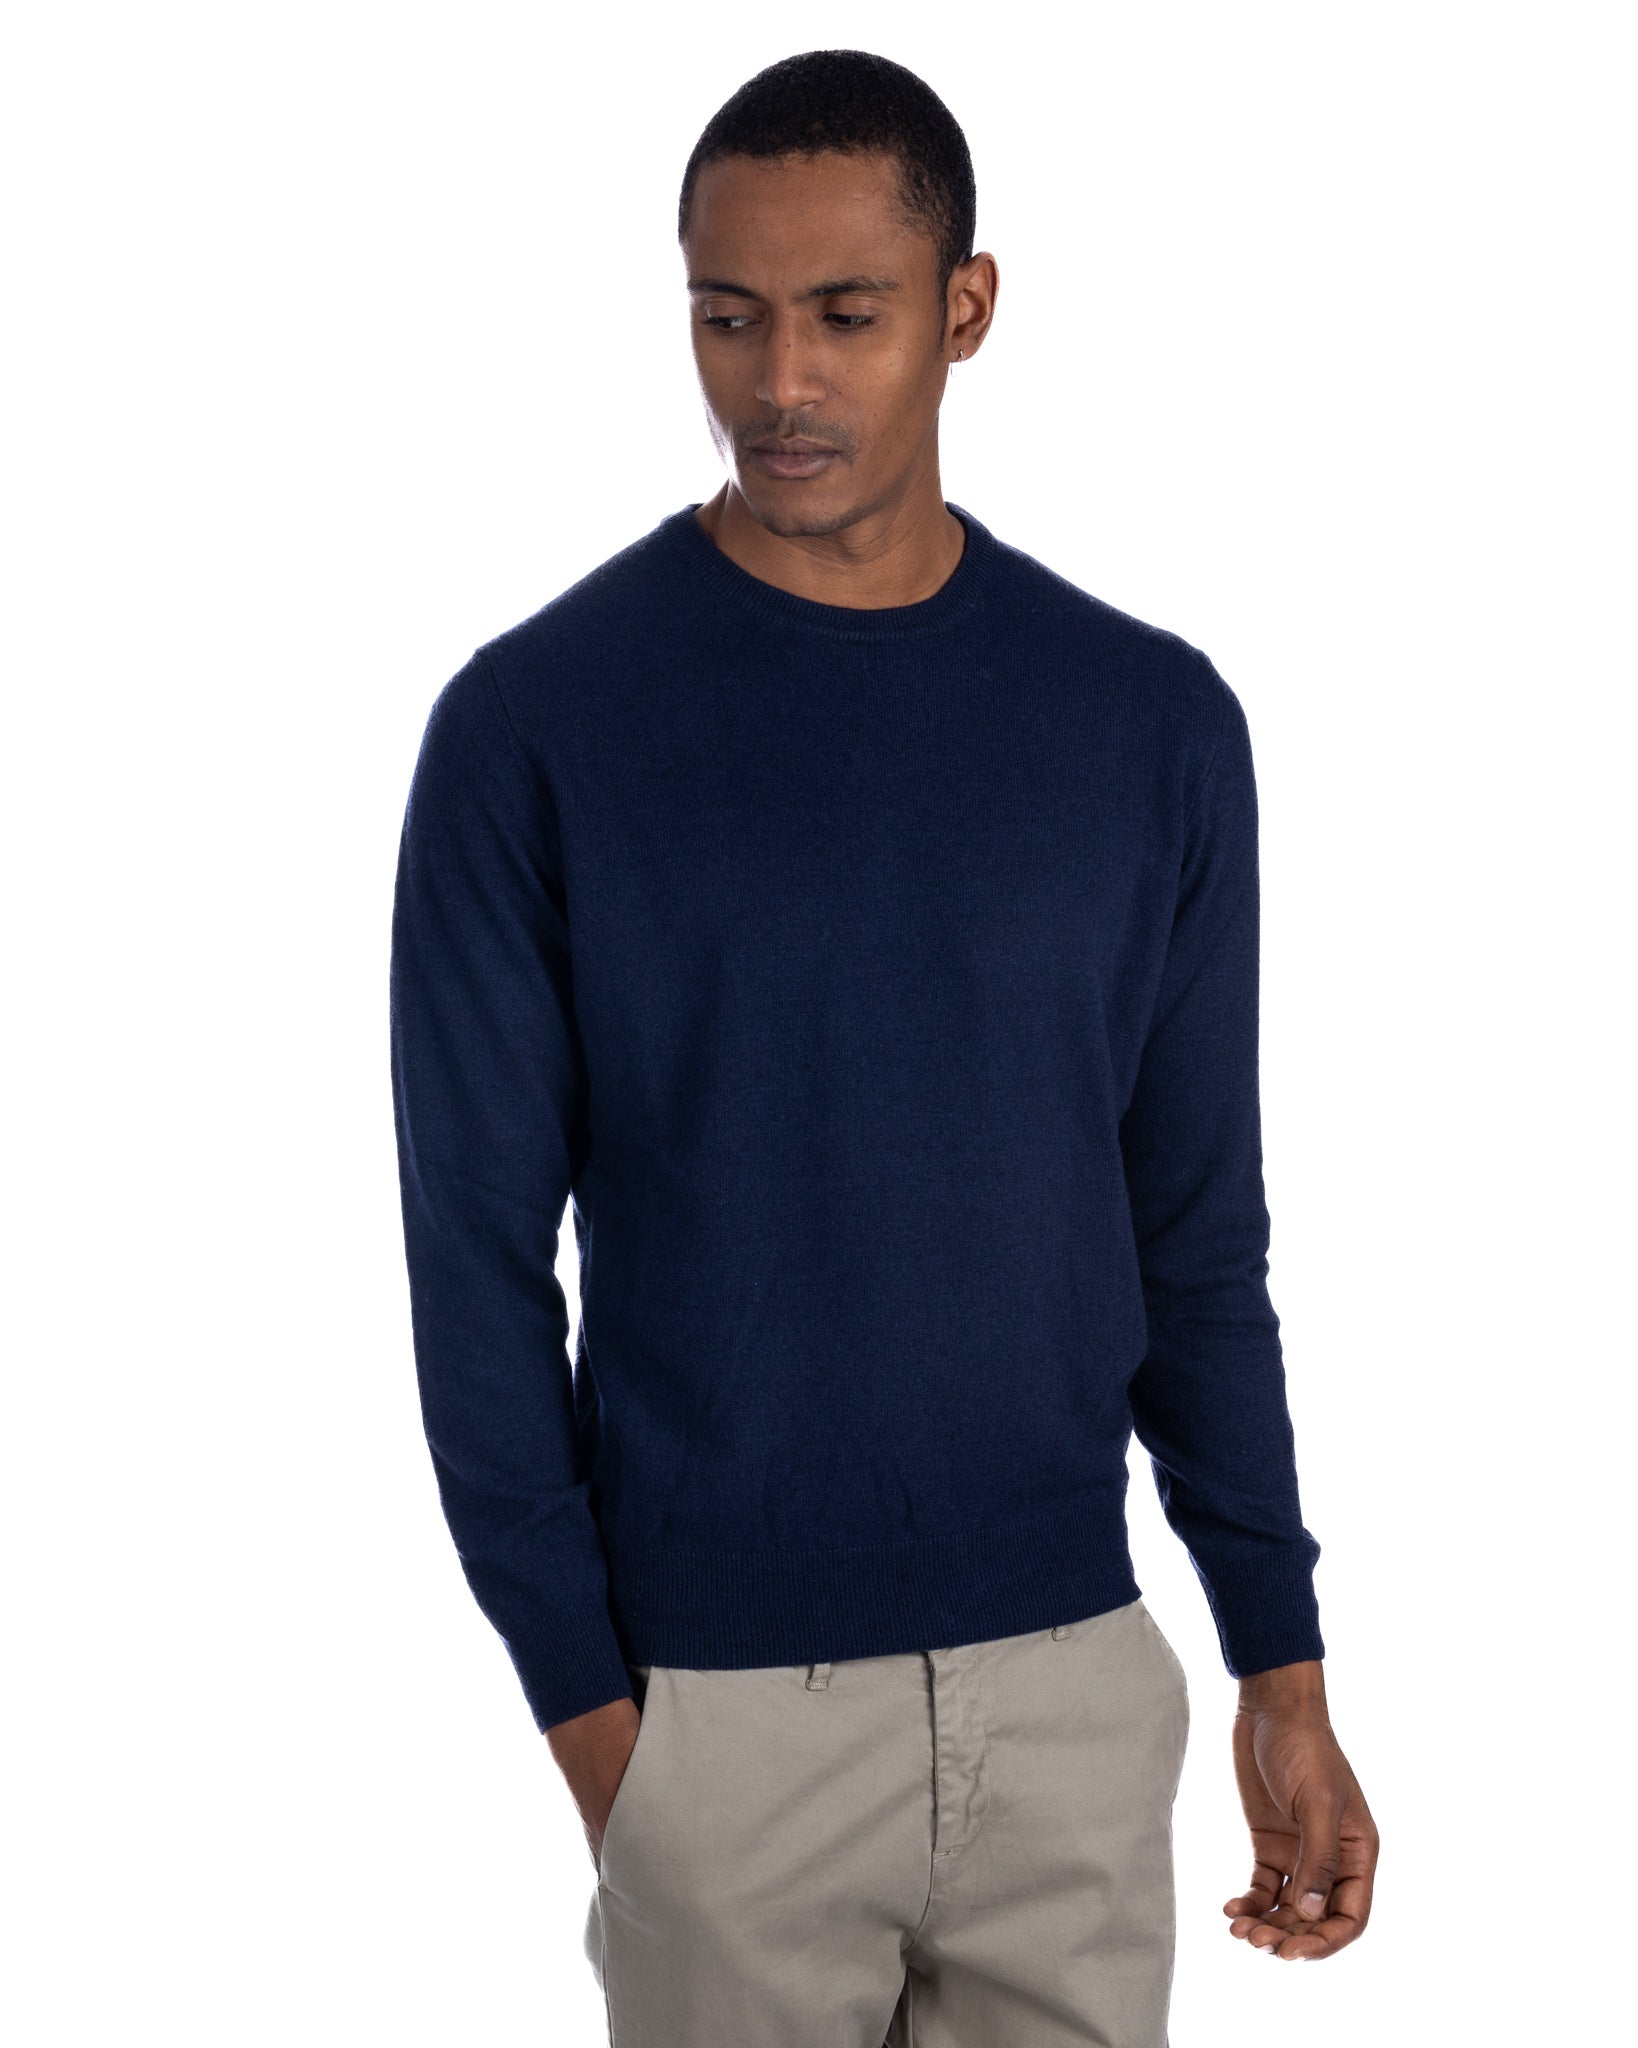 Dustin - blue cashmere blend crew neck sweater